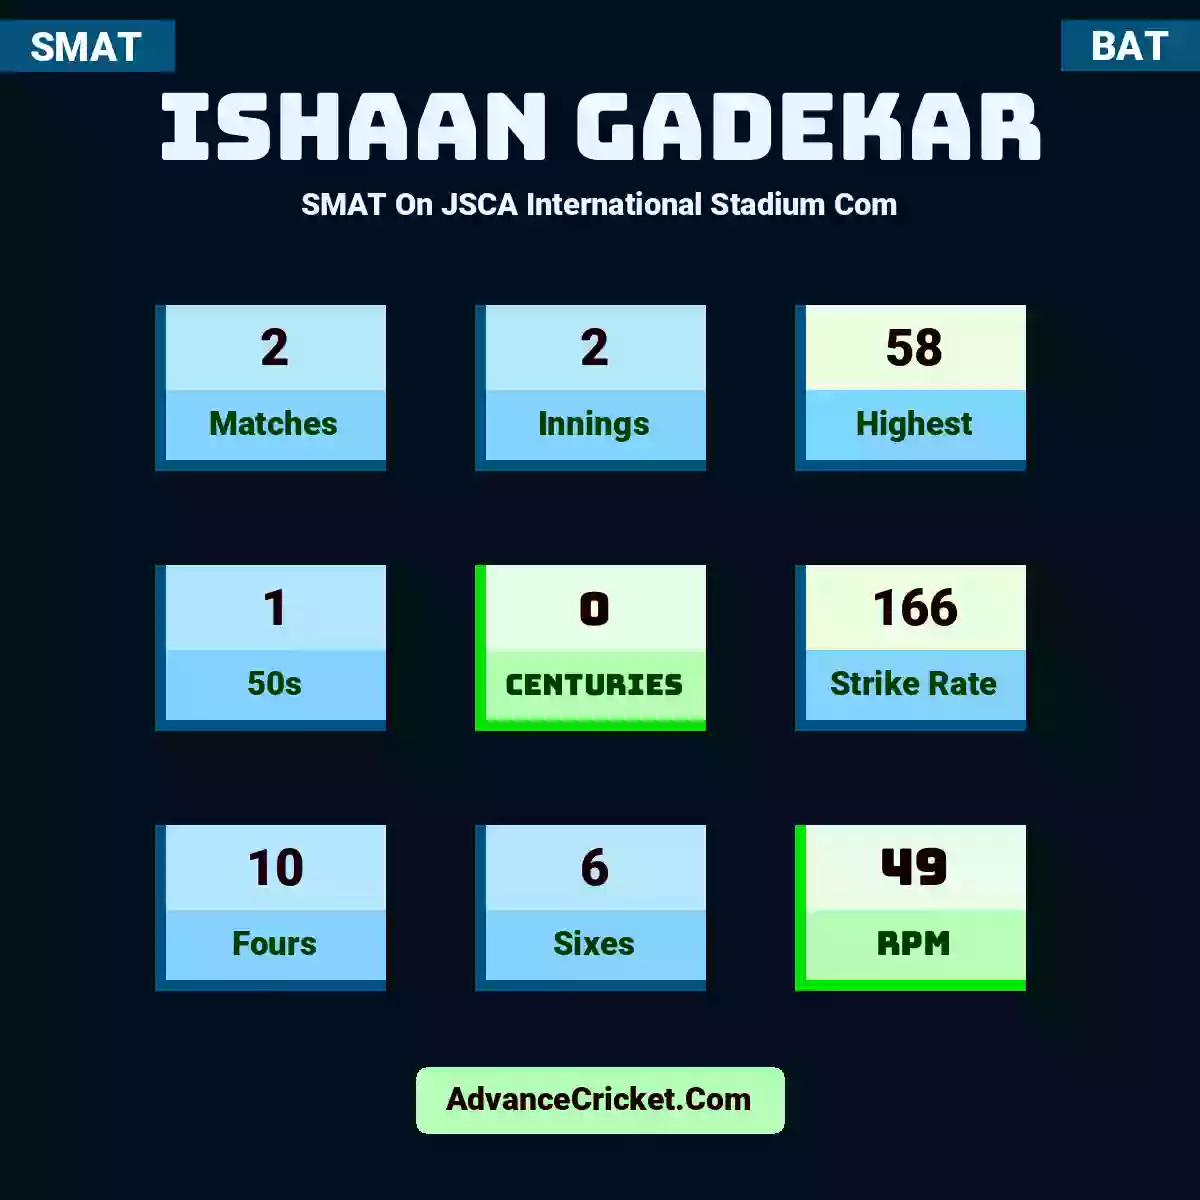 Ishaan Gadekar SMAT  On JSCA International Stadium Com, Ishaan Gadekar played 2 matches, scored 58 runs as highest, 1 half-centuries, and 0 centuries, with a strike rate of 166. I.Gadekar hit 10 fours and 6 sixes, with an RPM of 49.